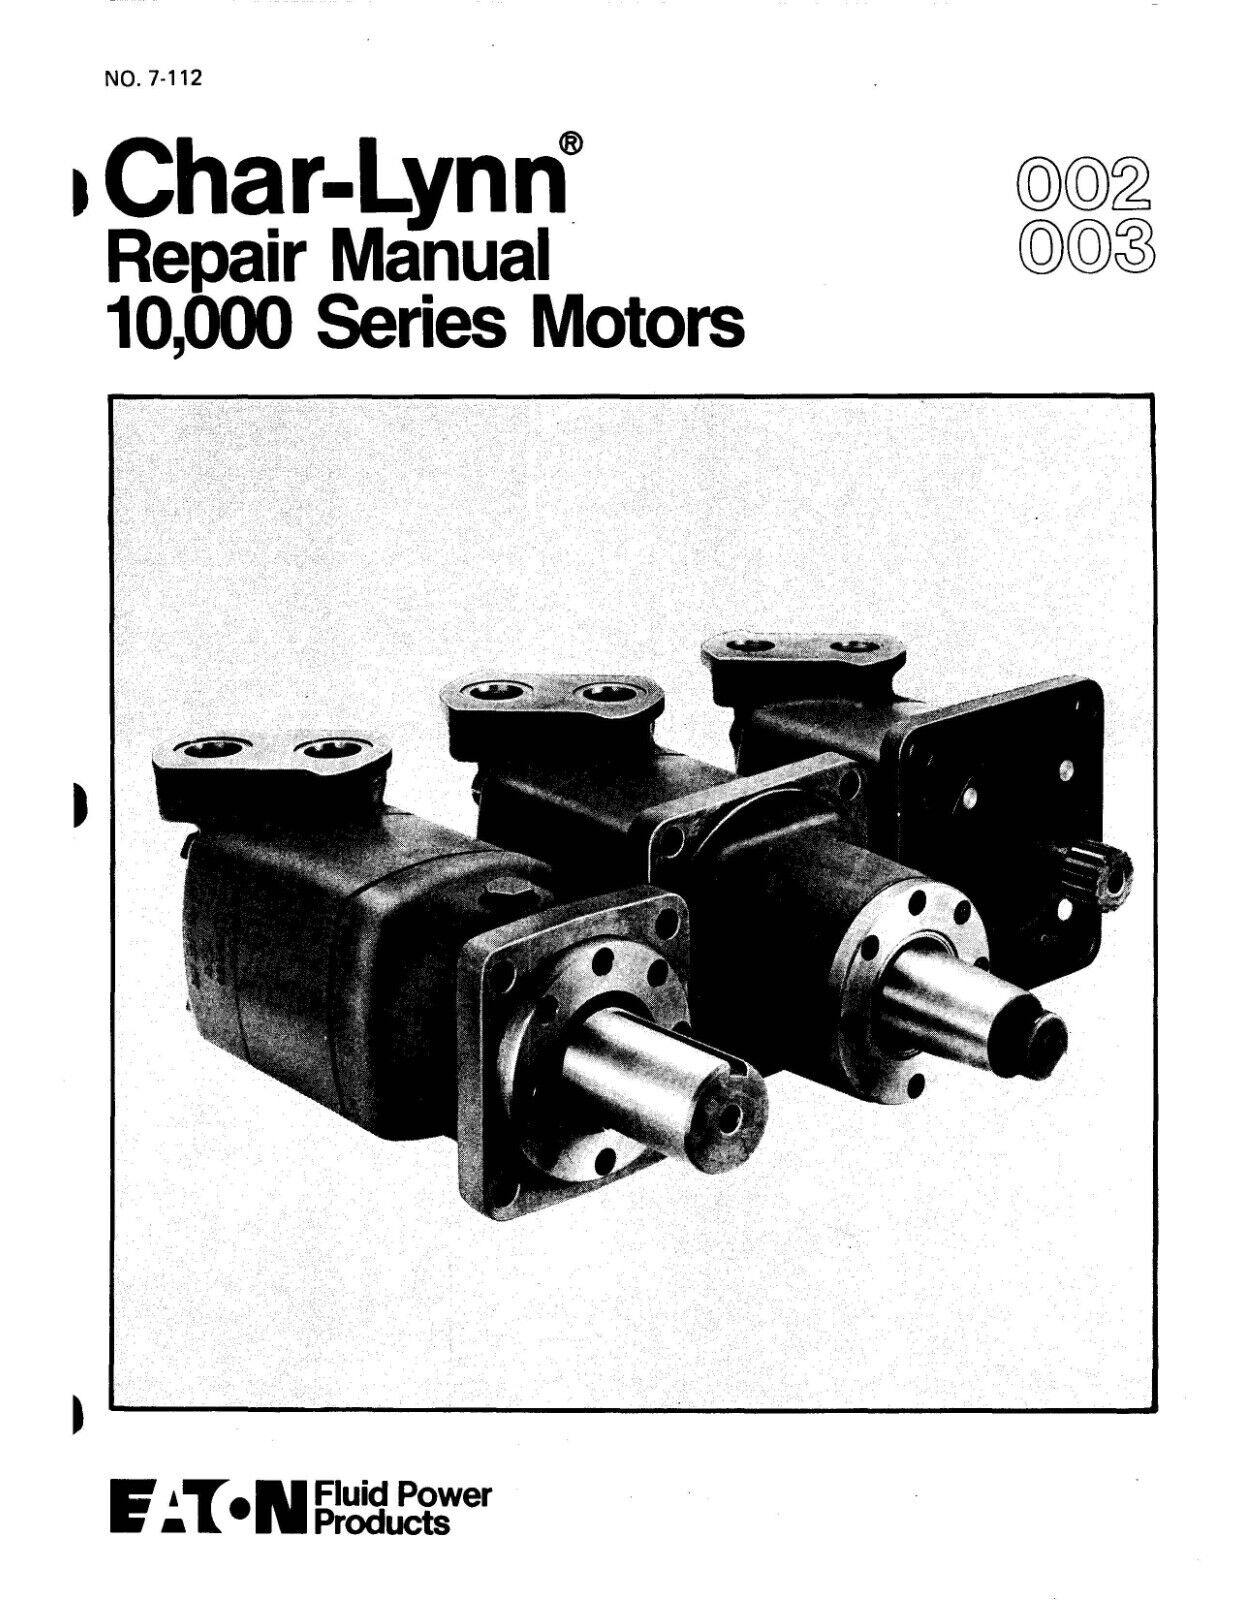 10000 Series Motors Service Repair Manual Fits Eaton Char-Lynn 7-112 1981